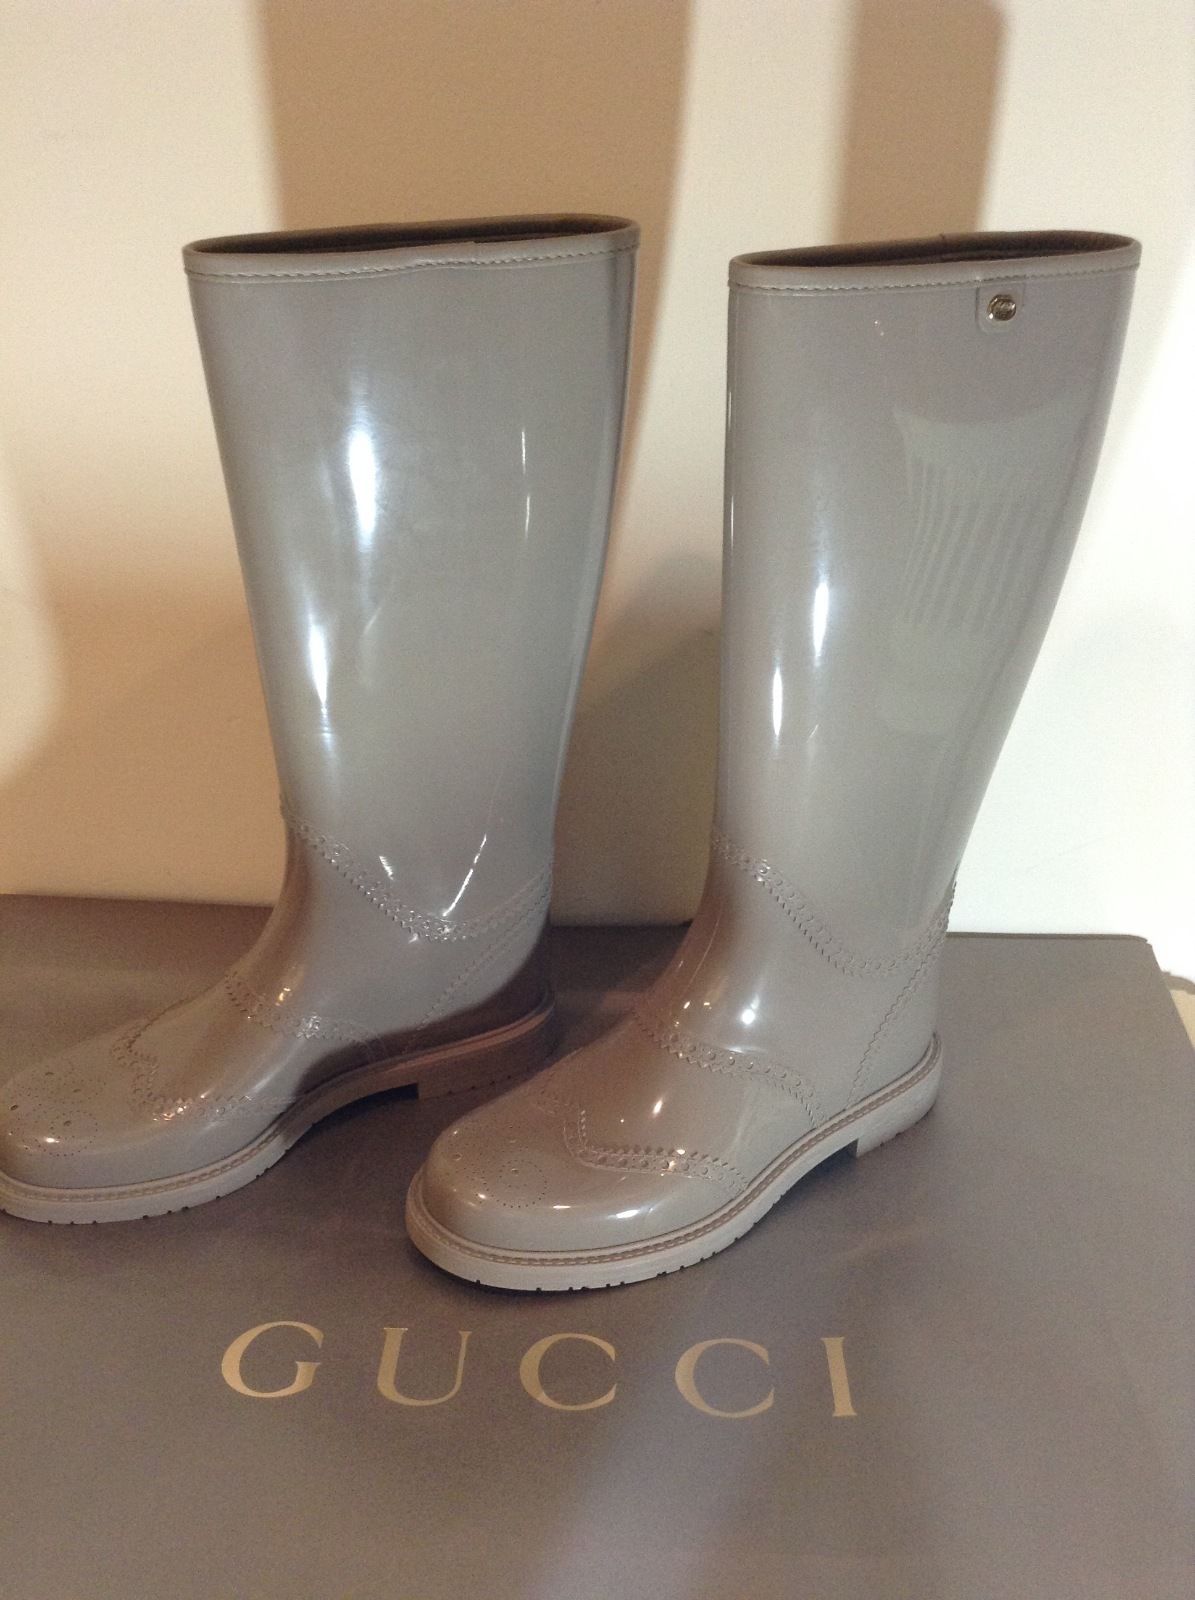 Gucci Rain Boots in Gray sz 9 Eu 39 BNIB with GG logo